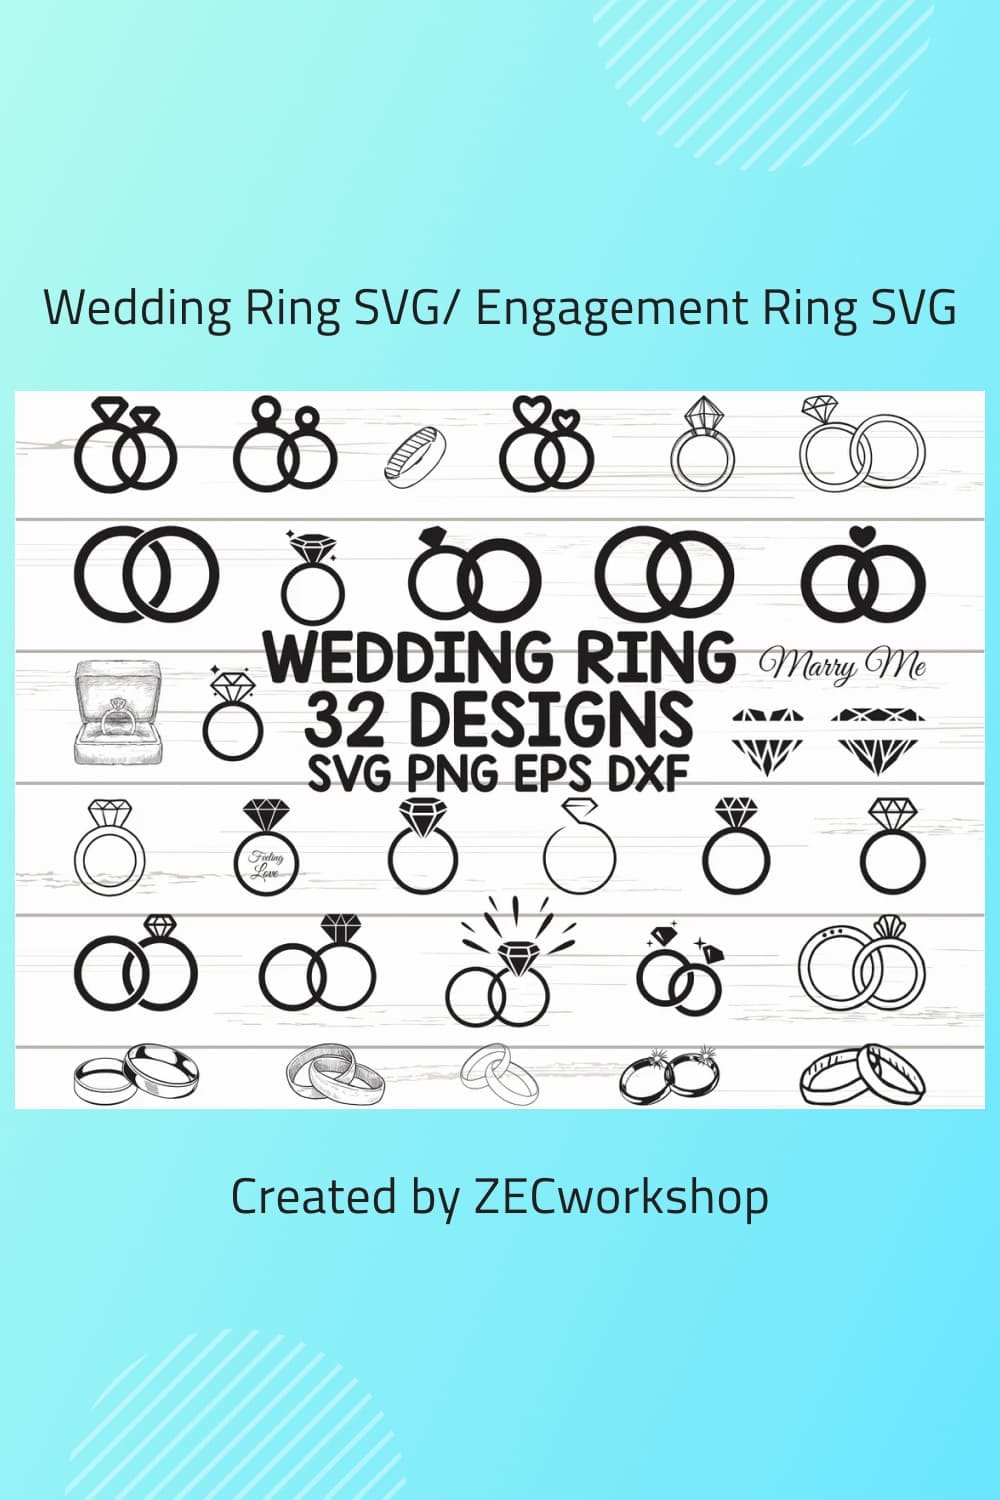 Engagement Ring SVG.